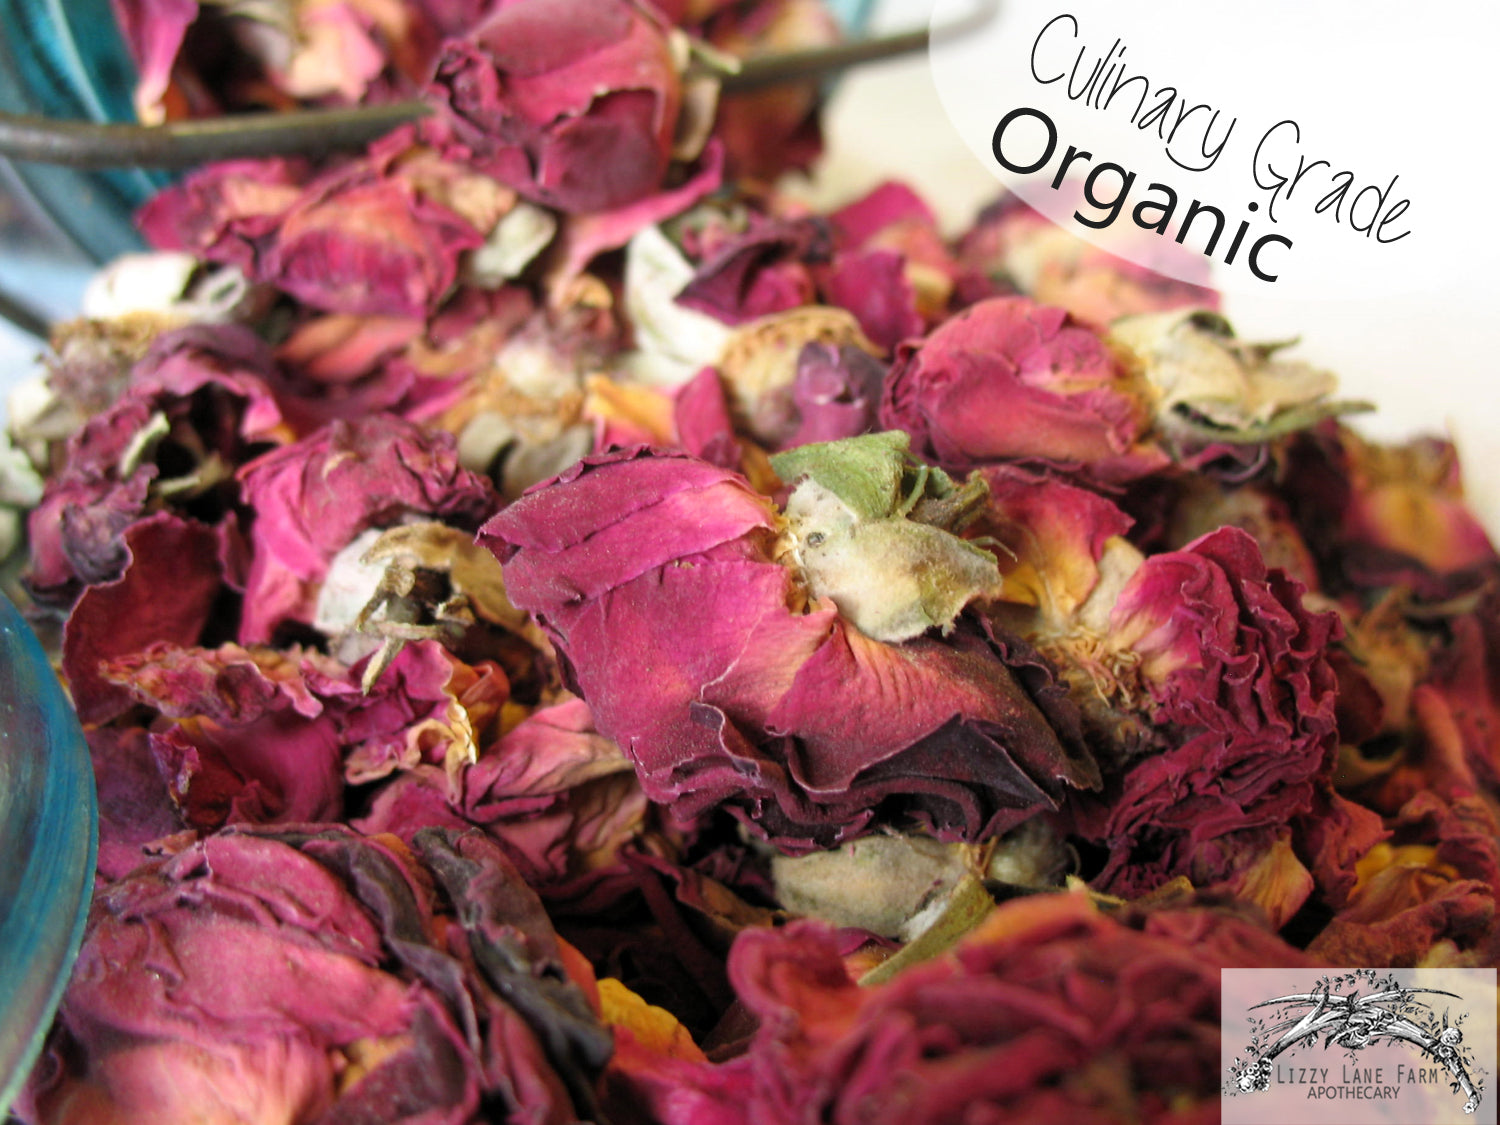 Organic Rose Petals